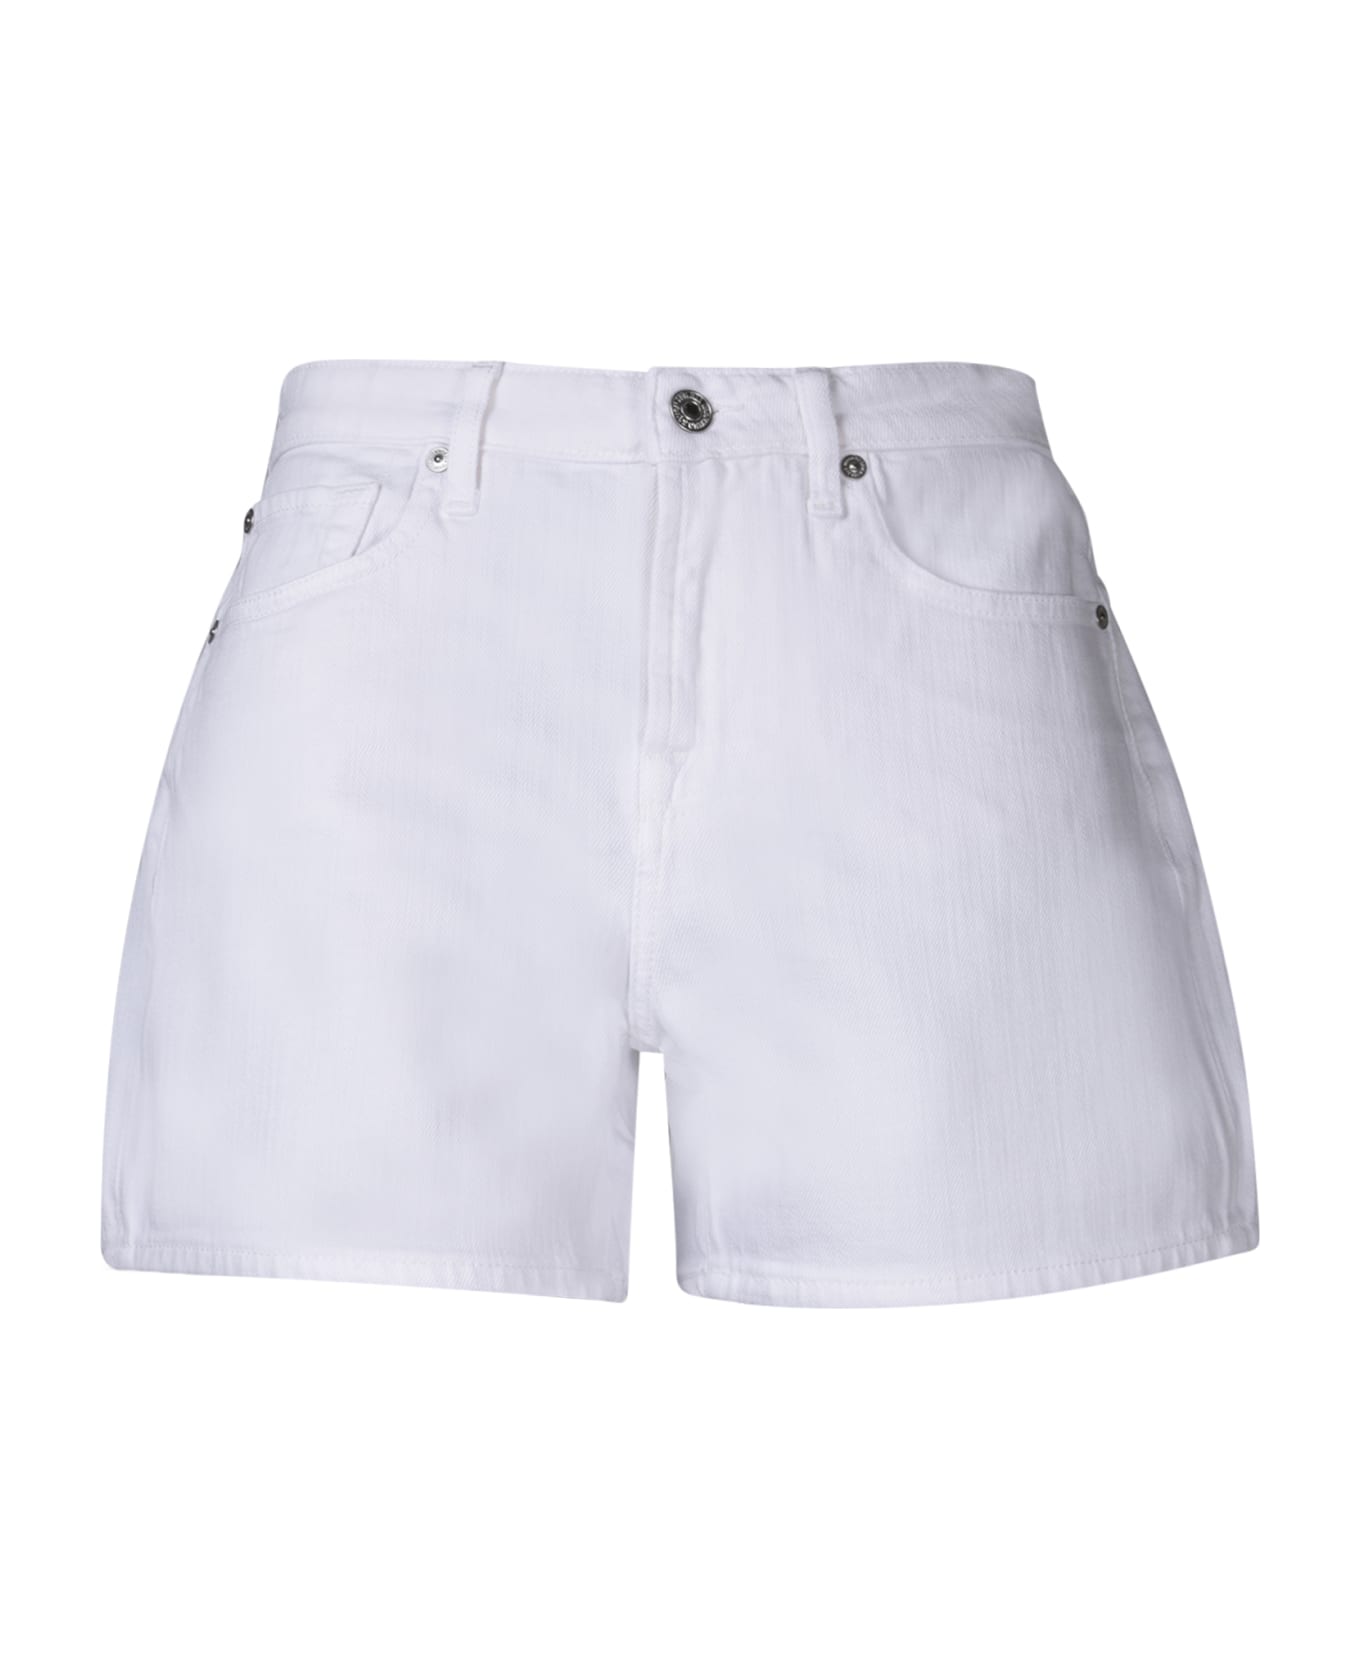 7 For All Mankind Monroe White Shorts - White